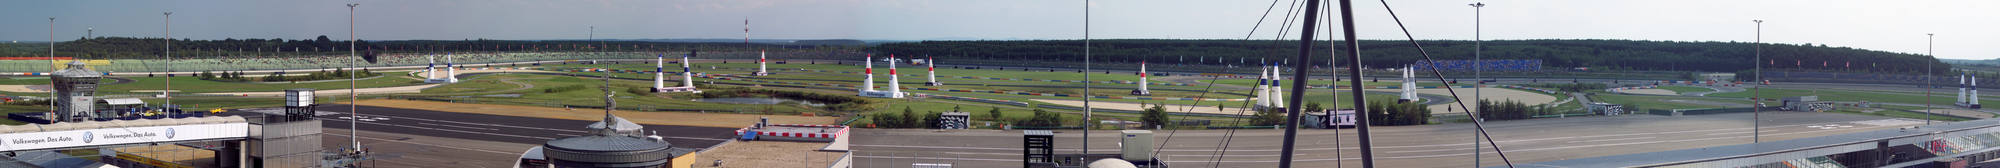 Red Bull Air Race auf dem EuroSpeedway